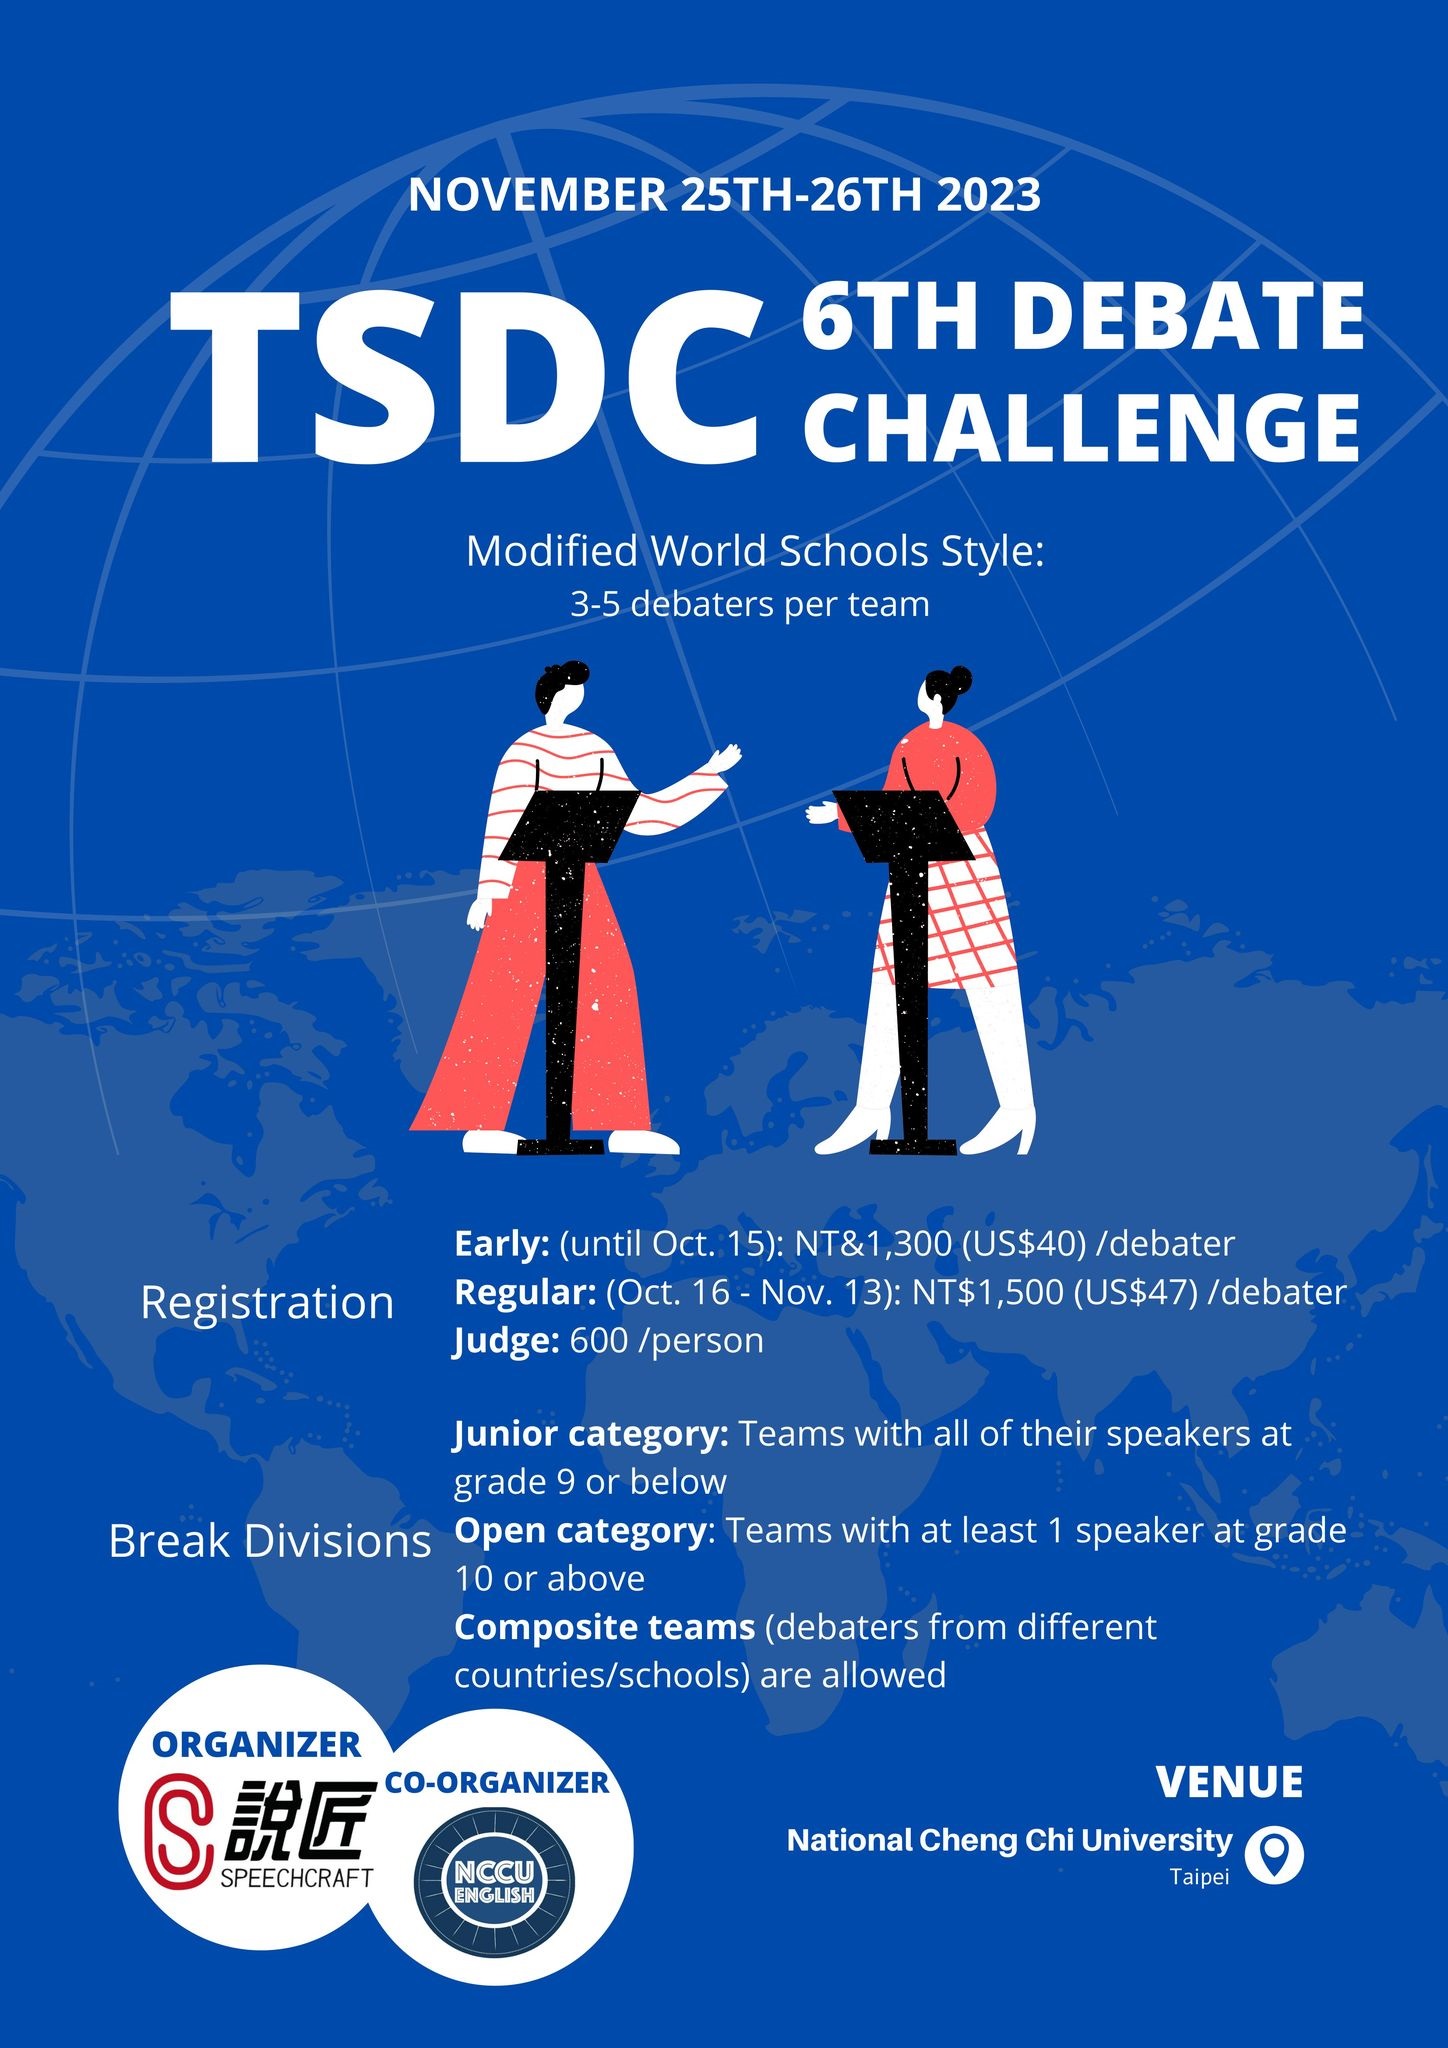 TSDC 6th Debate Challengs: 11/25-26 @ NCCU